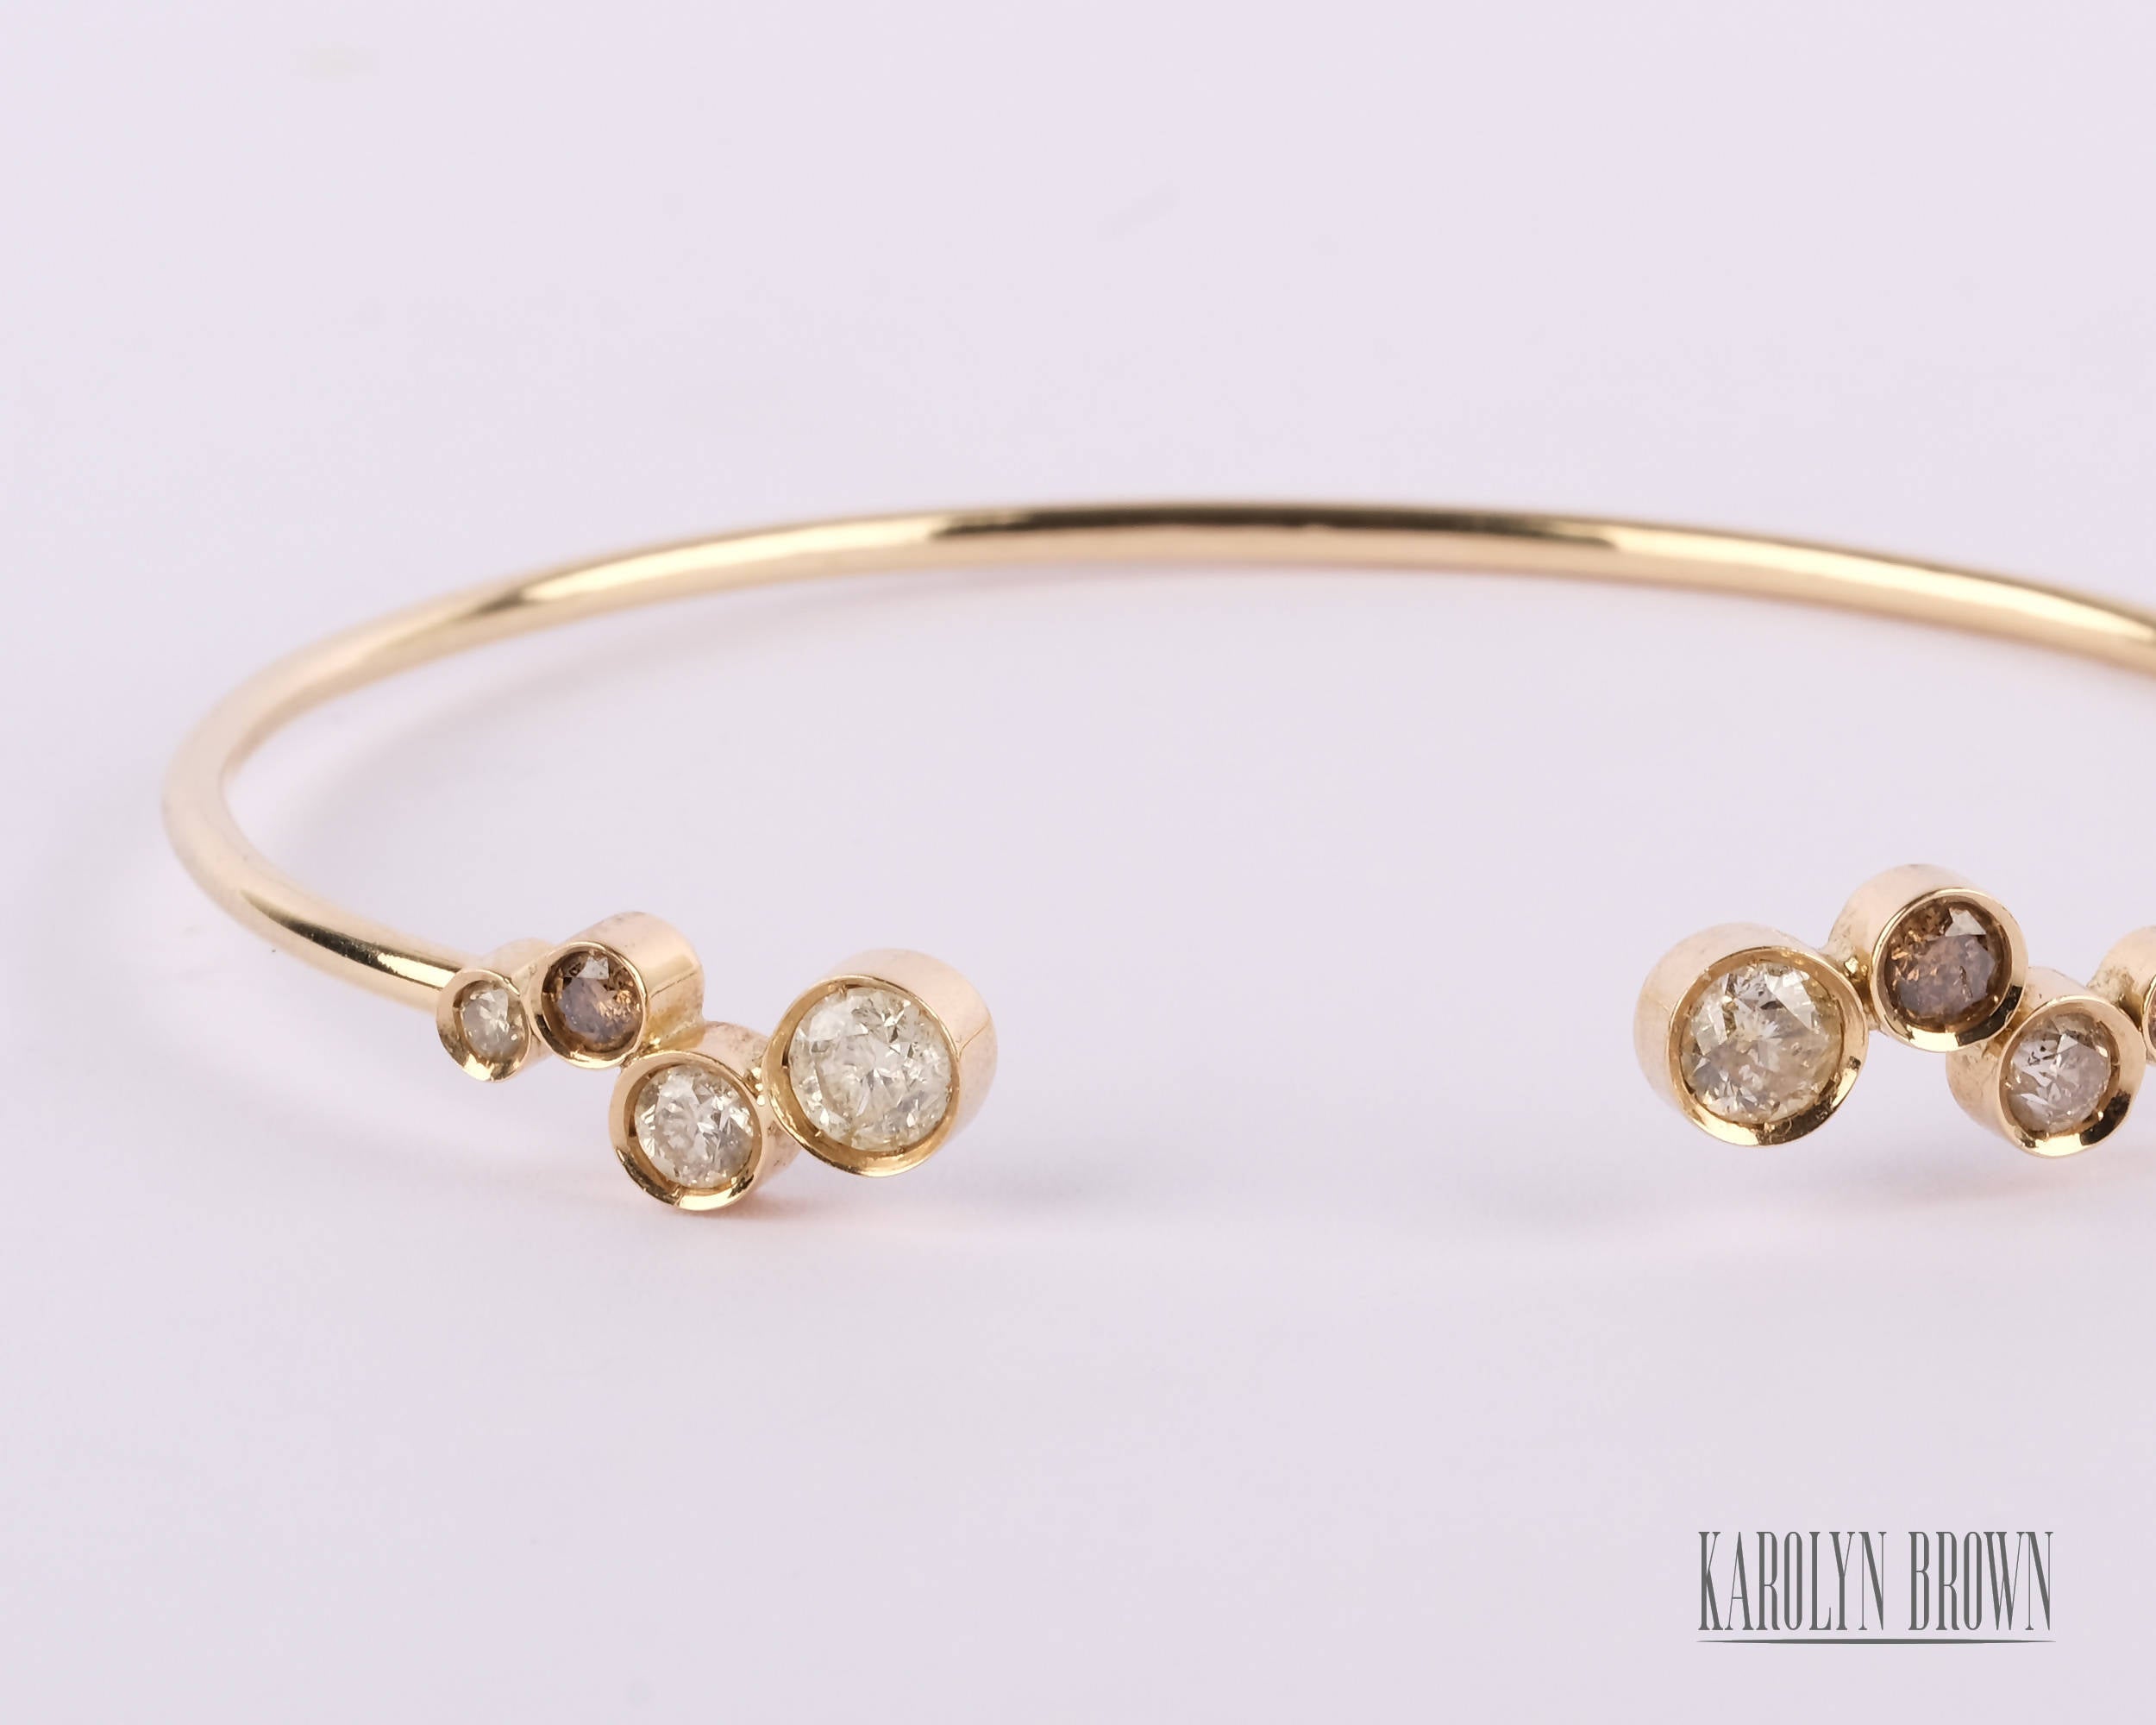 Tiffany Champaign Diamonds - Karolyn Brown Jewelry